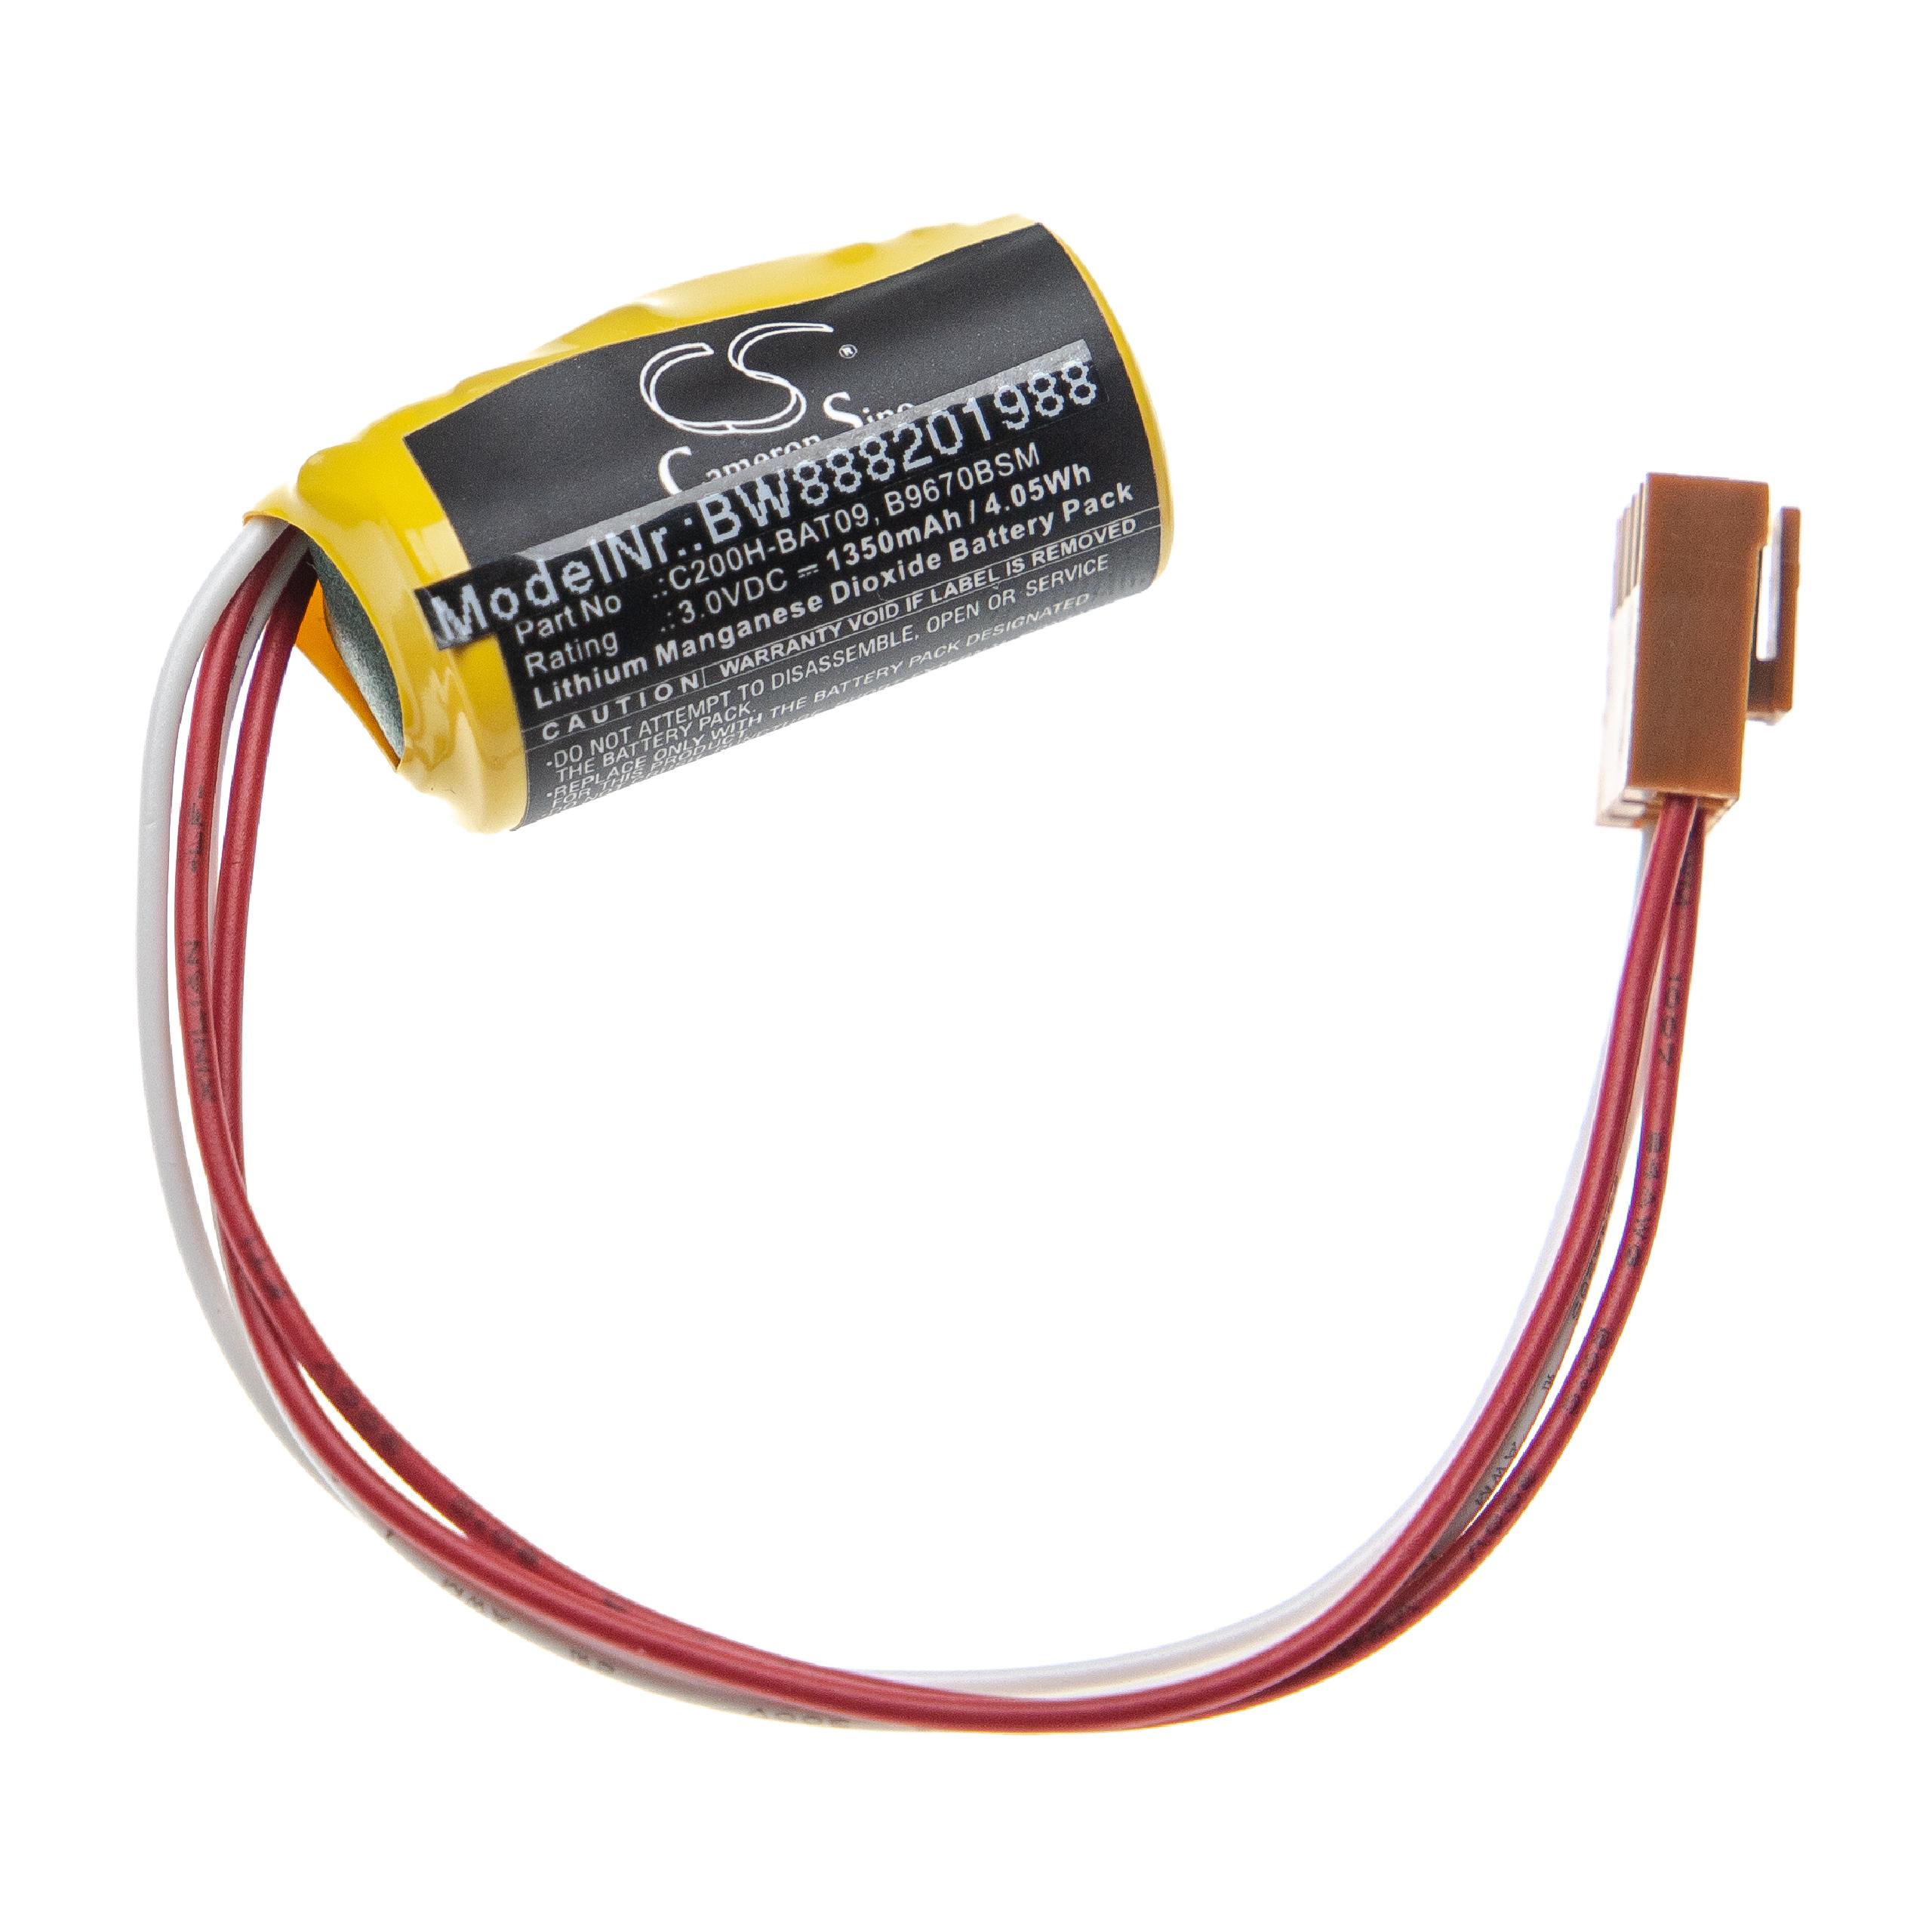 CNC Controller Battery Replacement for Omron C200H-BAT09, B9670BSM - 1350mAh 3V Li-MnO2